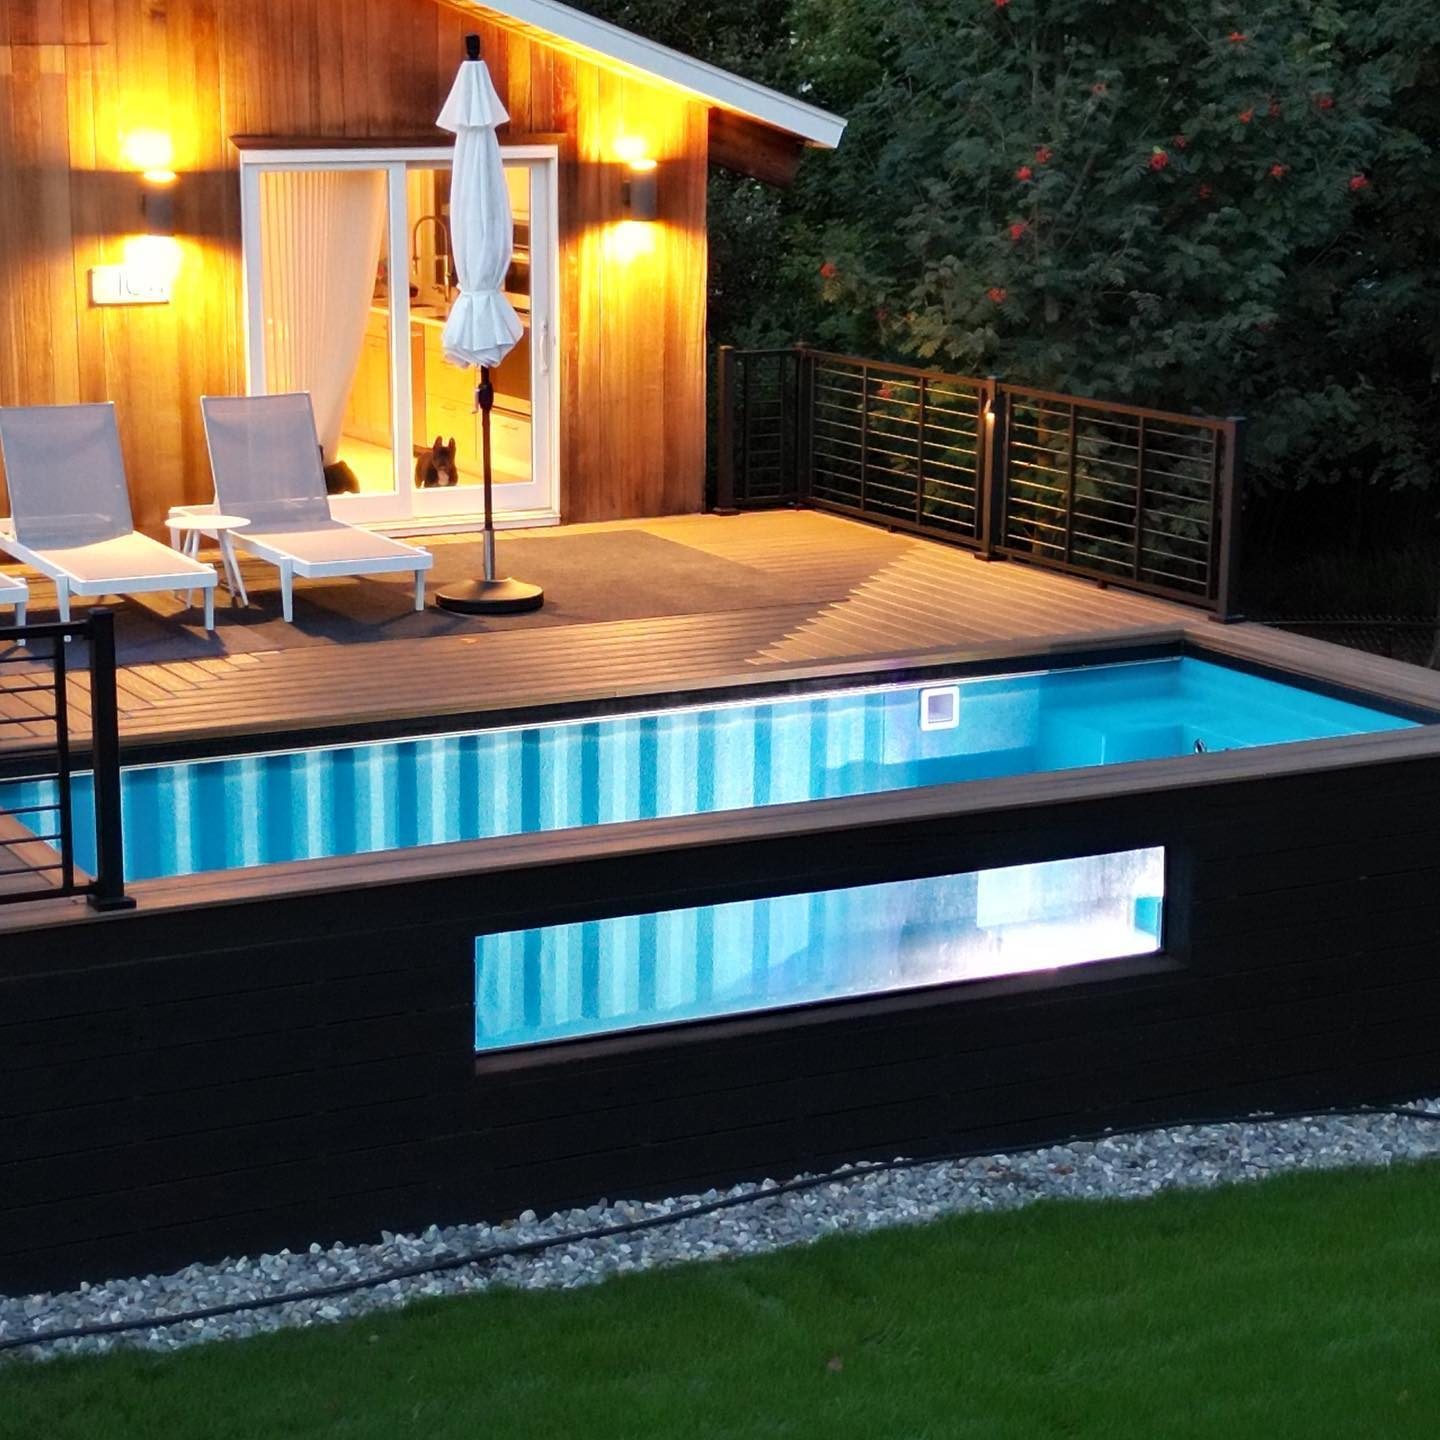 8 Backyard Pool Ideas On a Budget